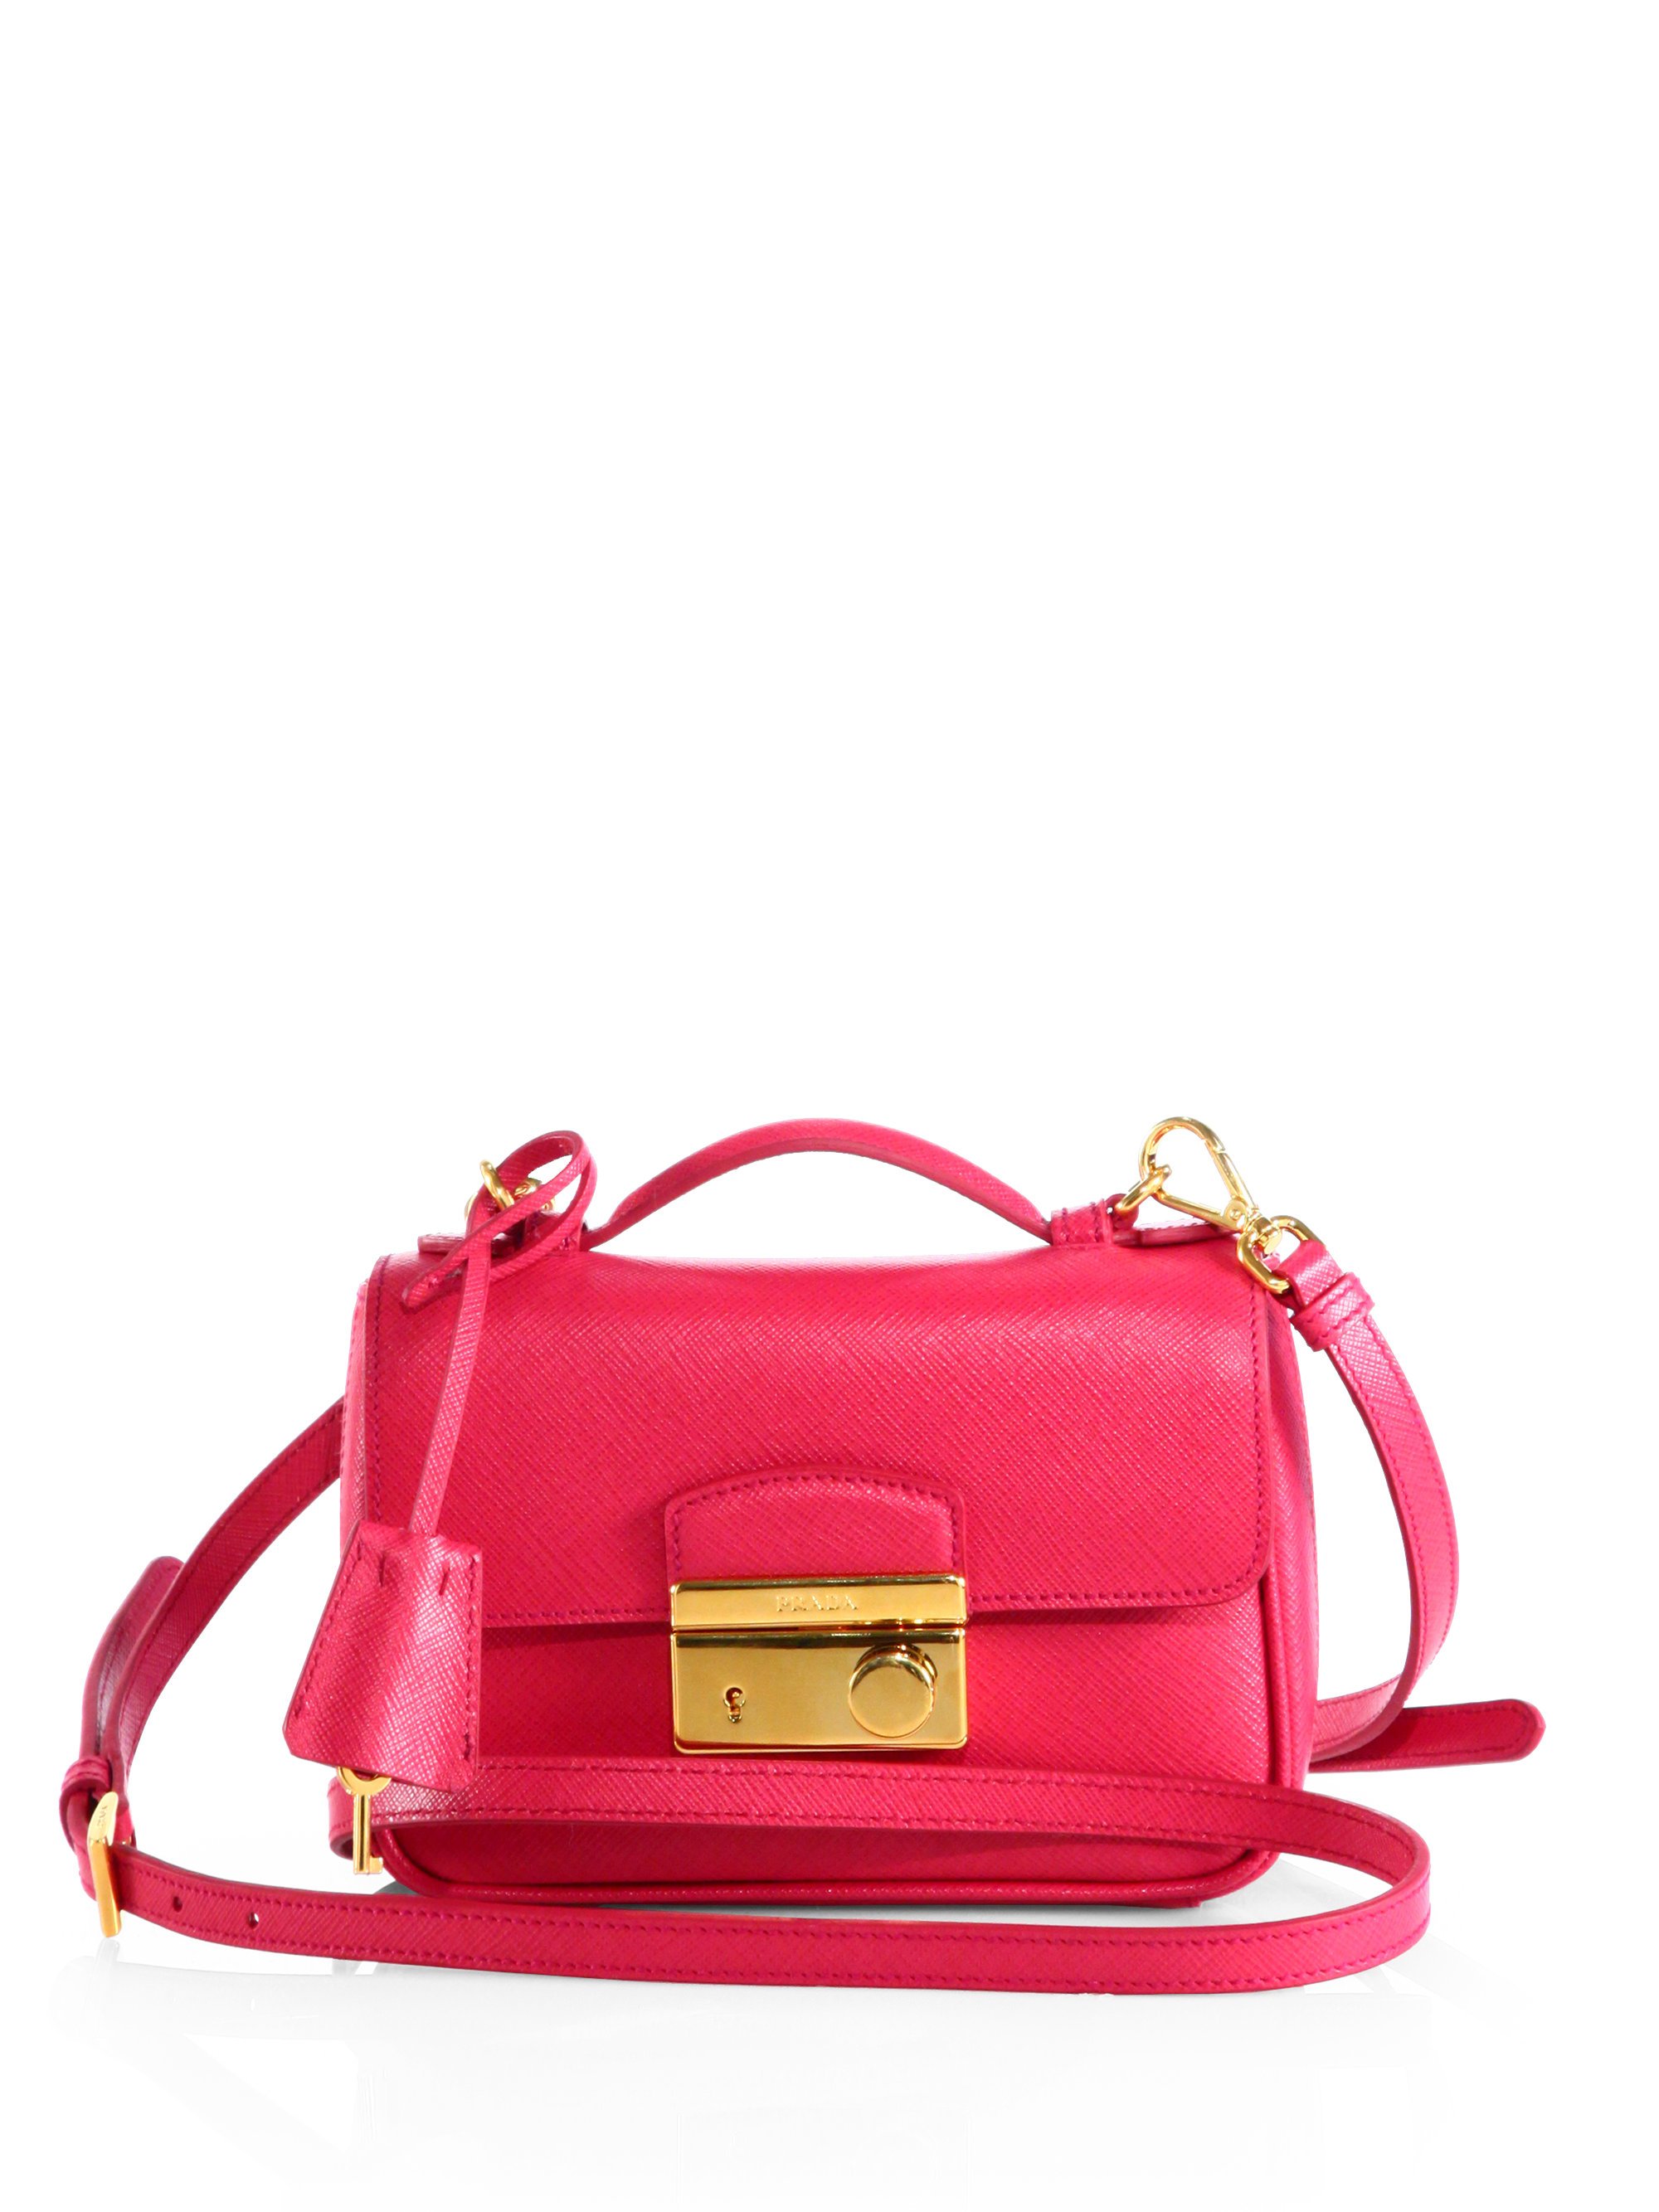 prada handbag price - Prada Saffiano Leather Mini Flap Crossbody Bag in Pink (PEONIA) | Lyst